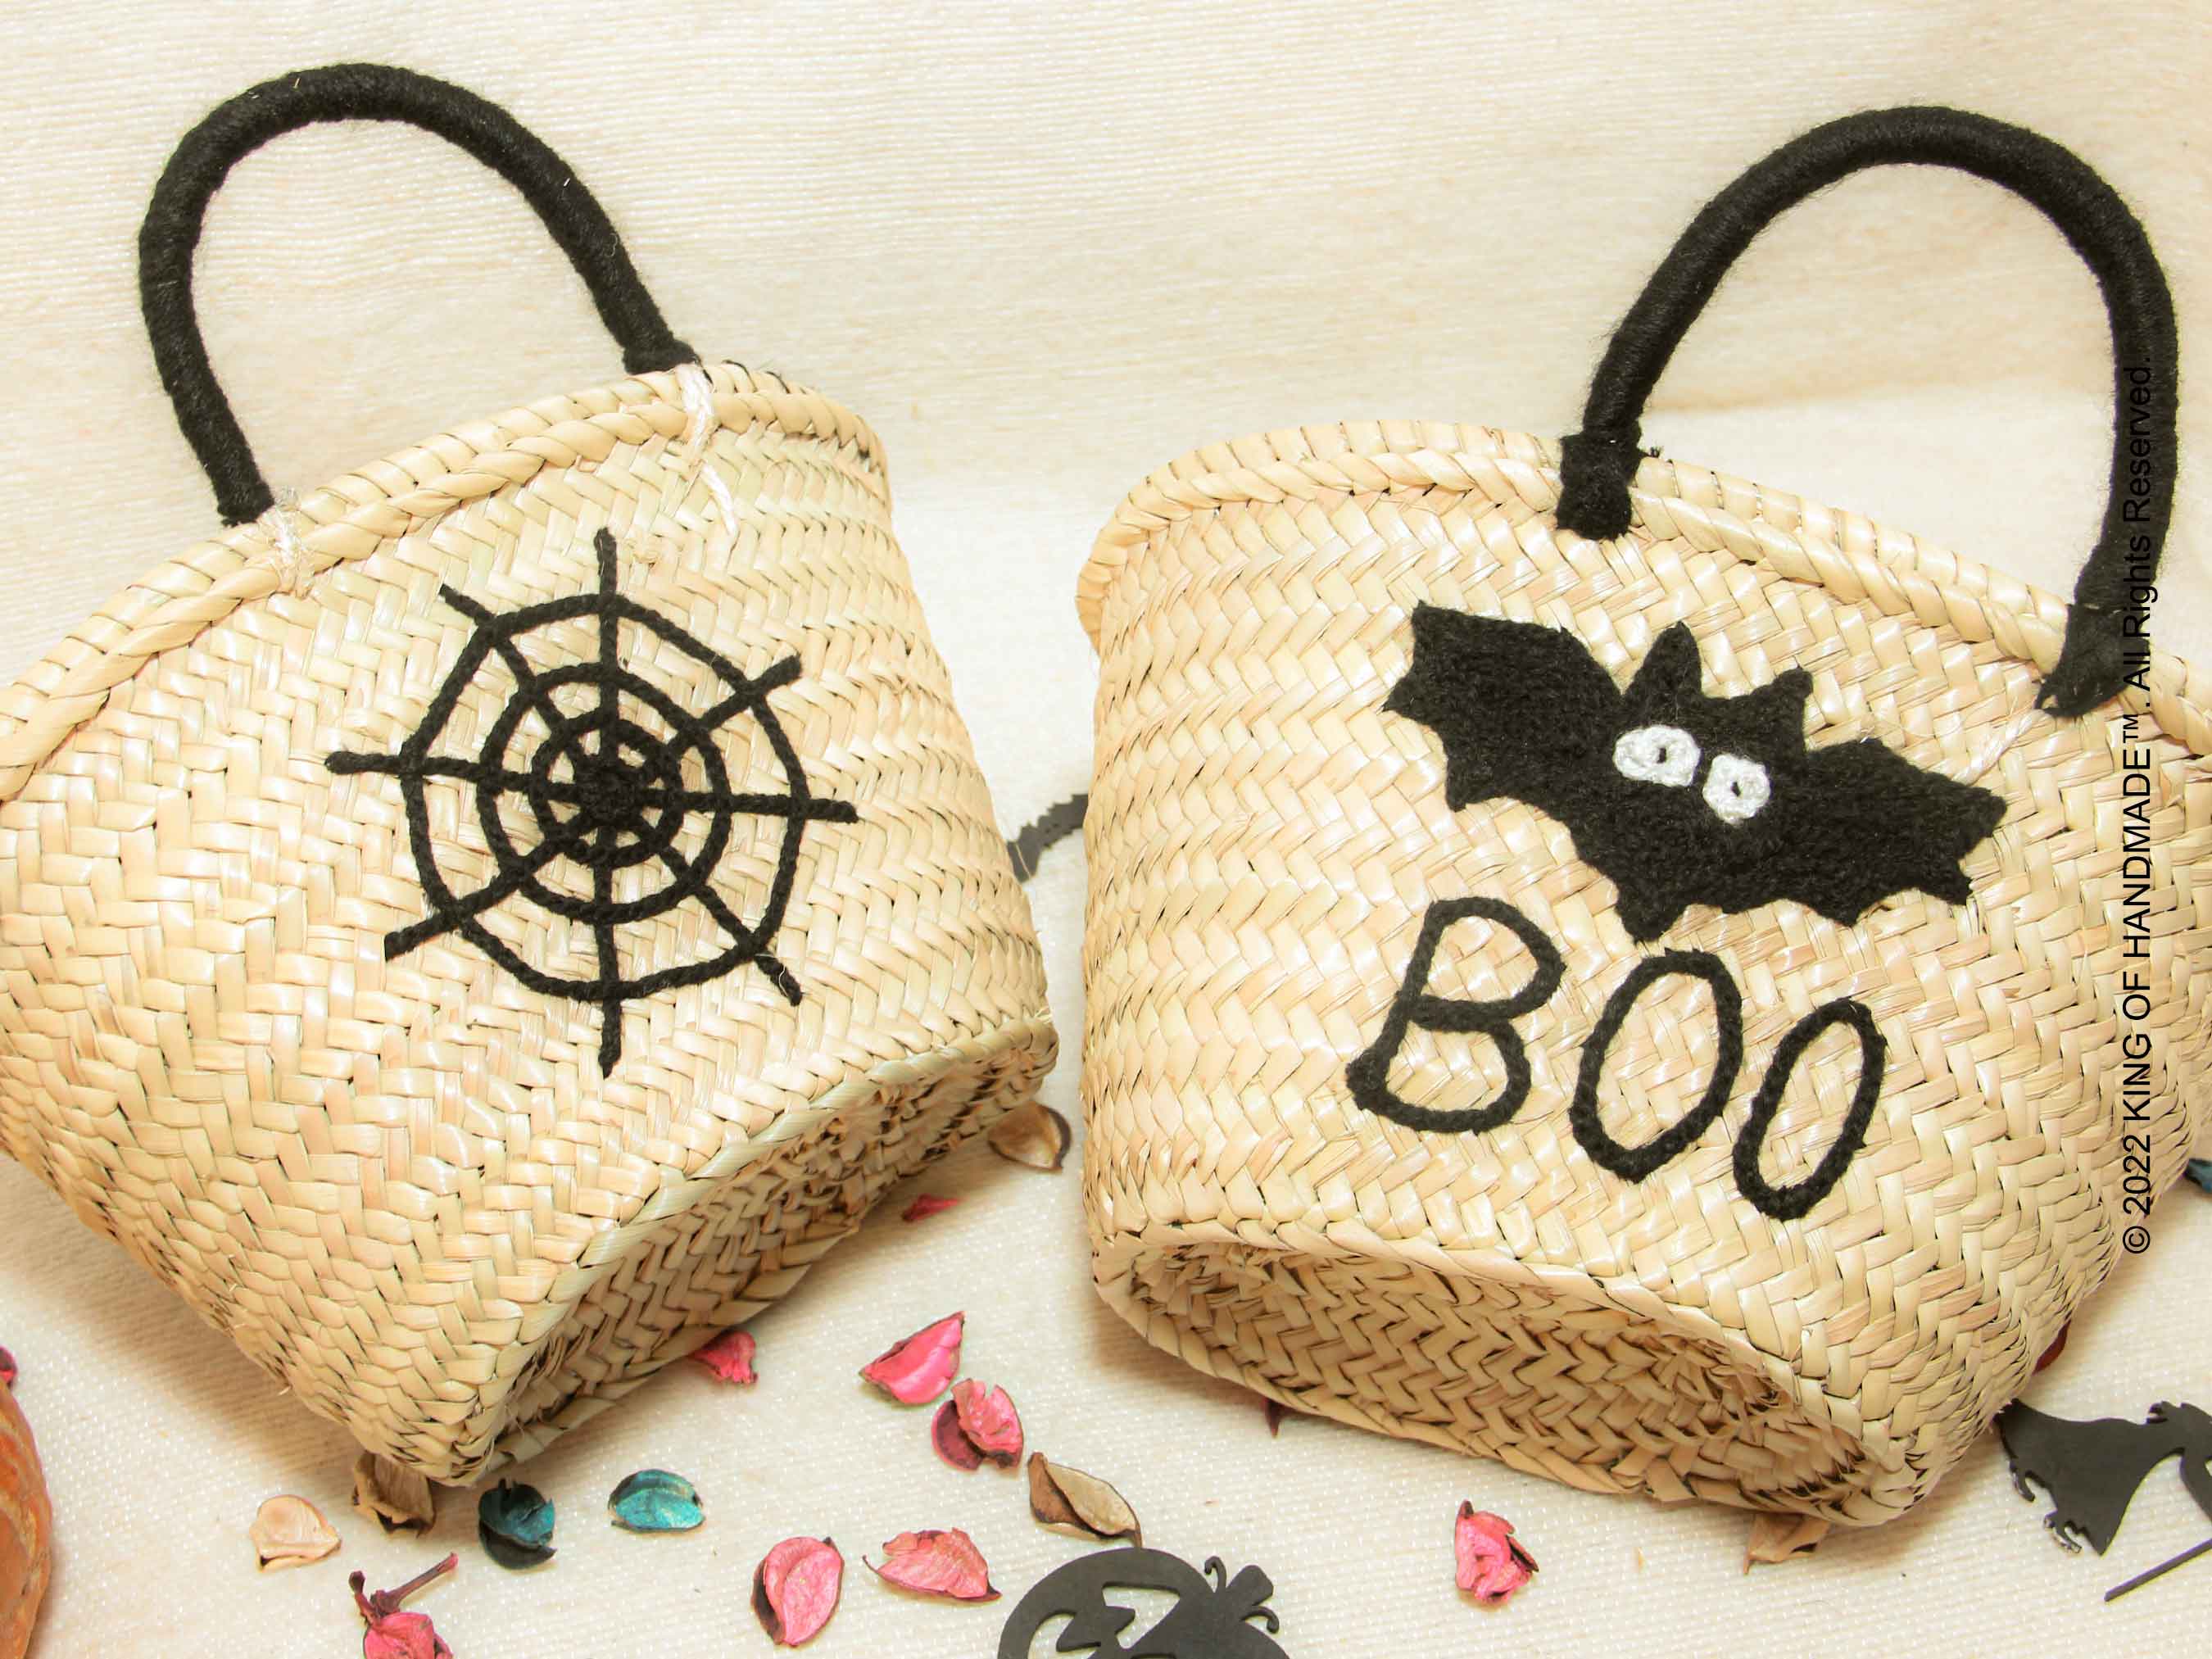 Boo! Halloween Bat Basket - Personalized